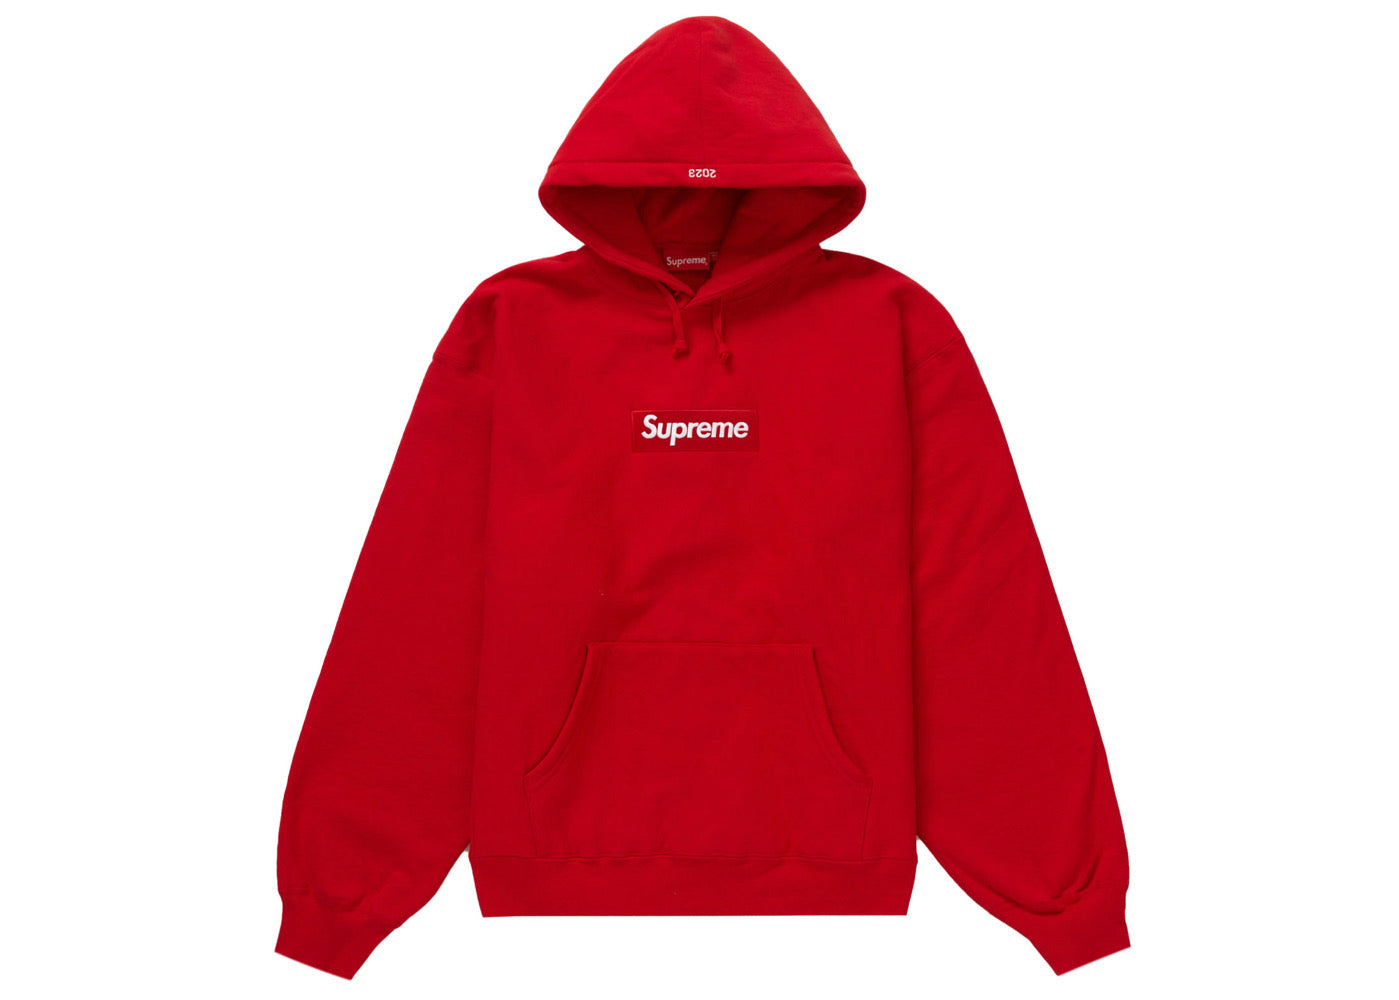 supremeSupreme box logo hooded sweatshirt